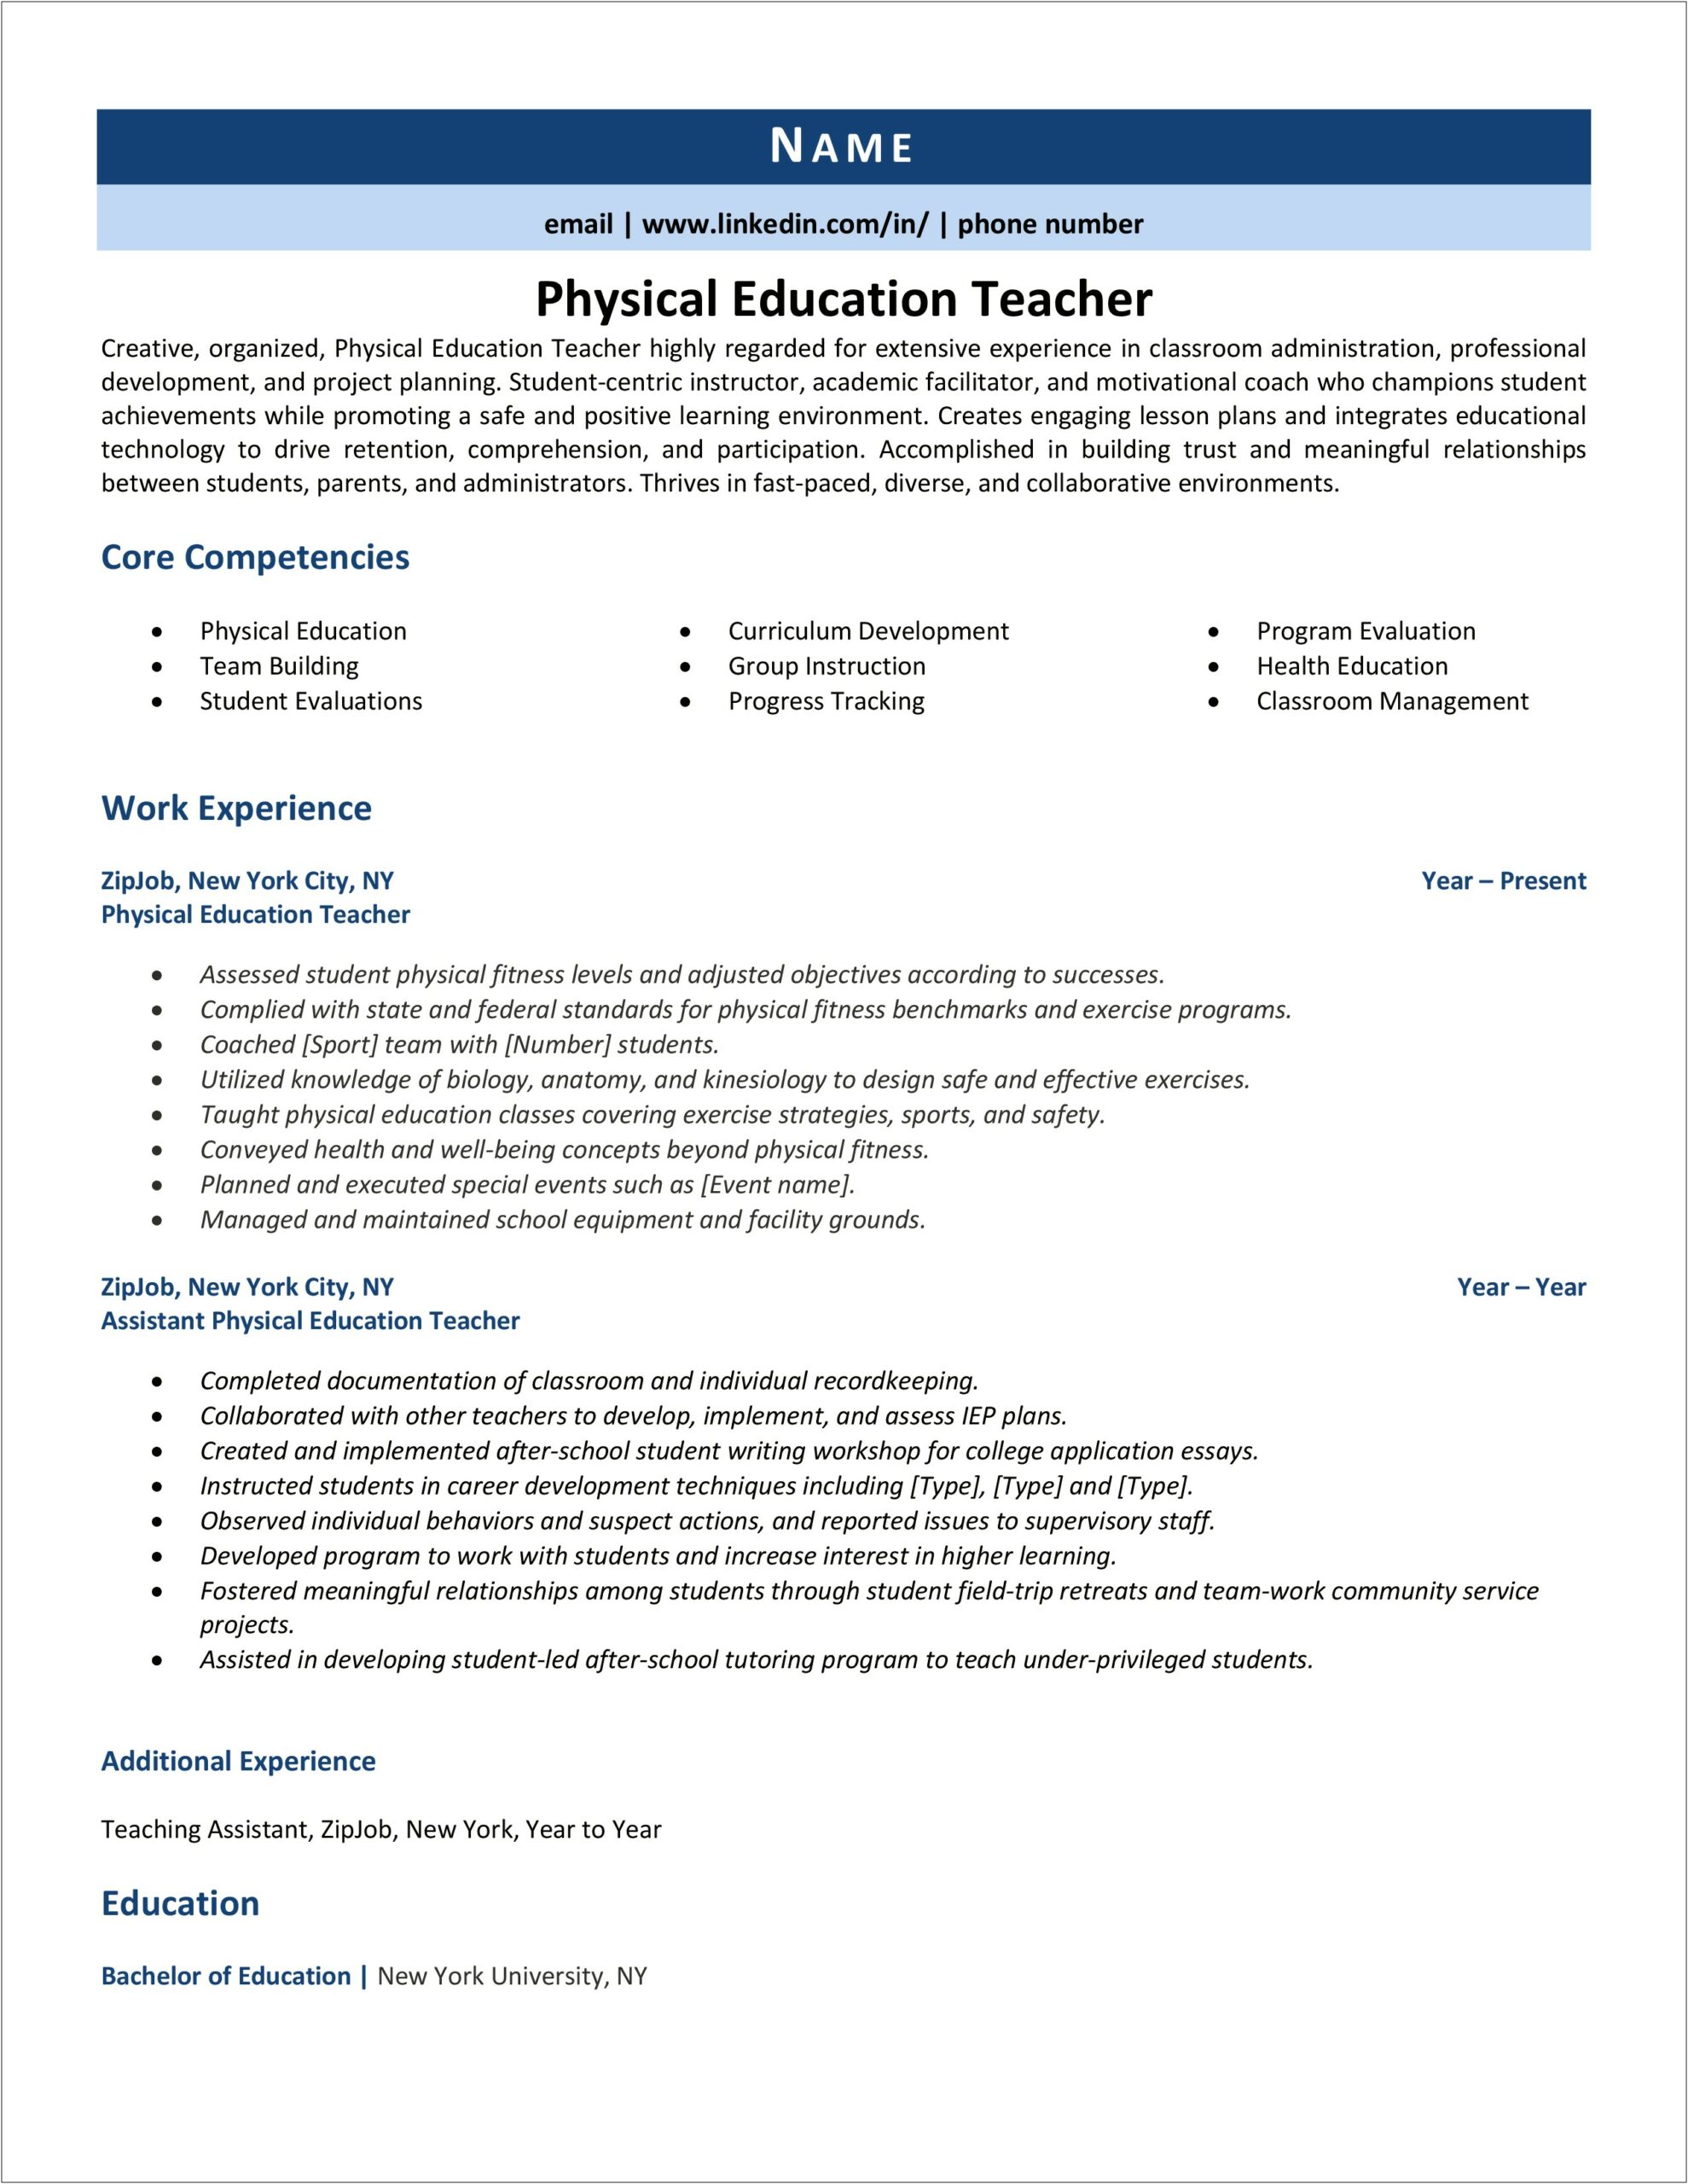 Physical Education Teacher Resumes Samples